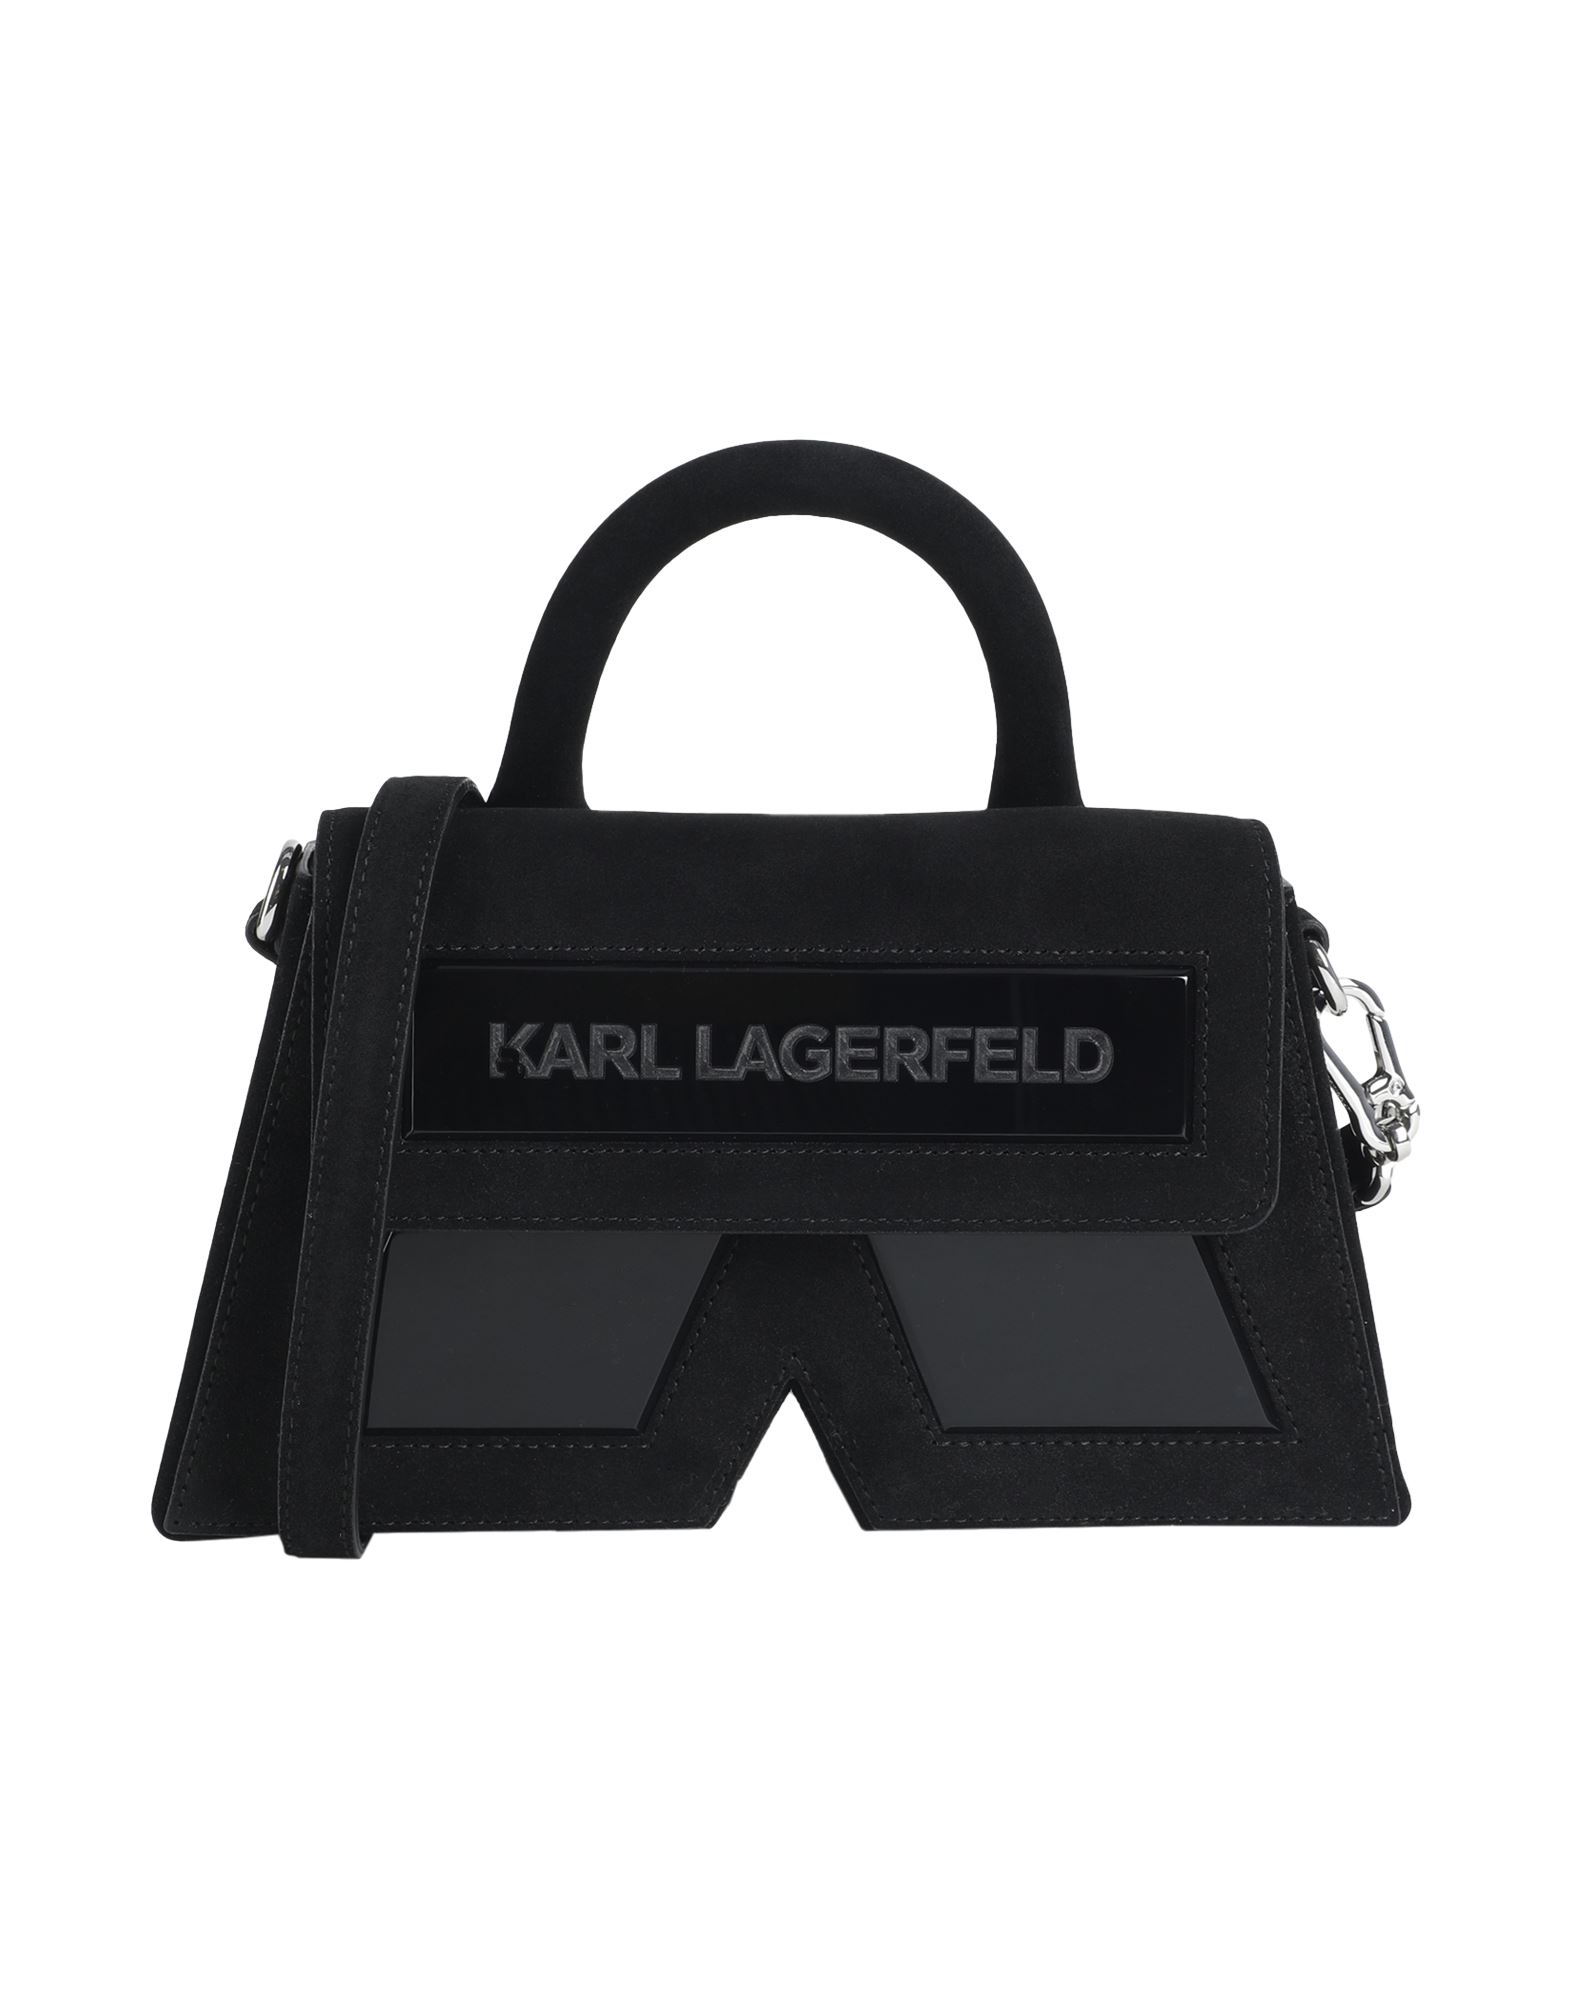 KARL LAGERFELD KARL LAGERFELD K/ESSENTIAL K CROSSBODY WOMAN HANDBAG BLACK SIZE - BOVINE LEATHER